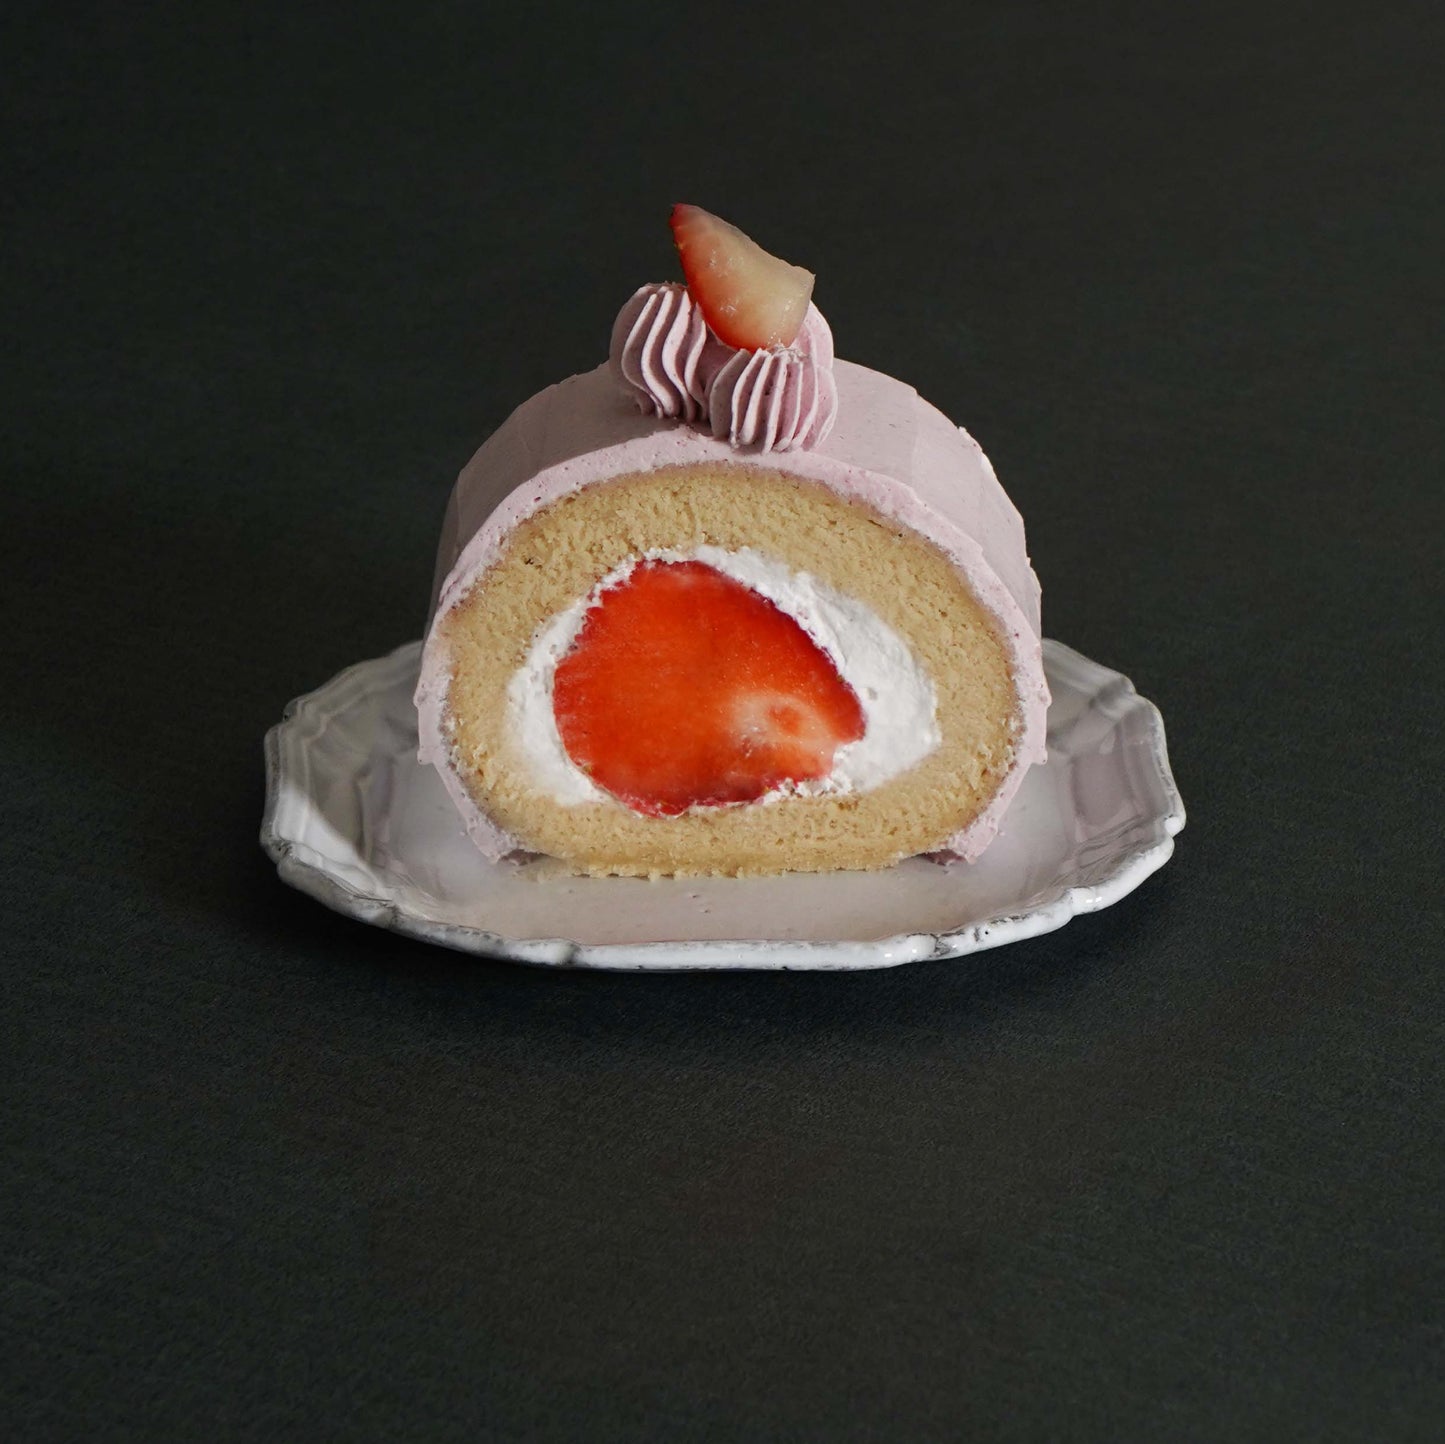 福岡甜王草莓香草純素卷蛋糕 Fukaoka Strawberry Vegan Roll Cake In Roll